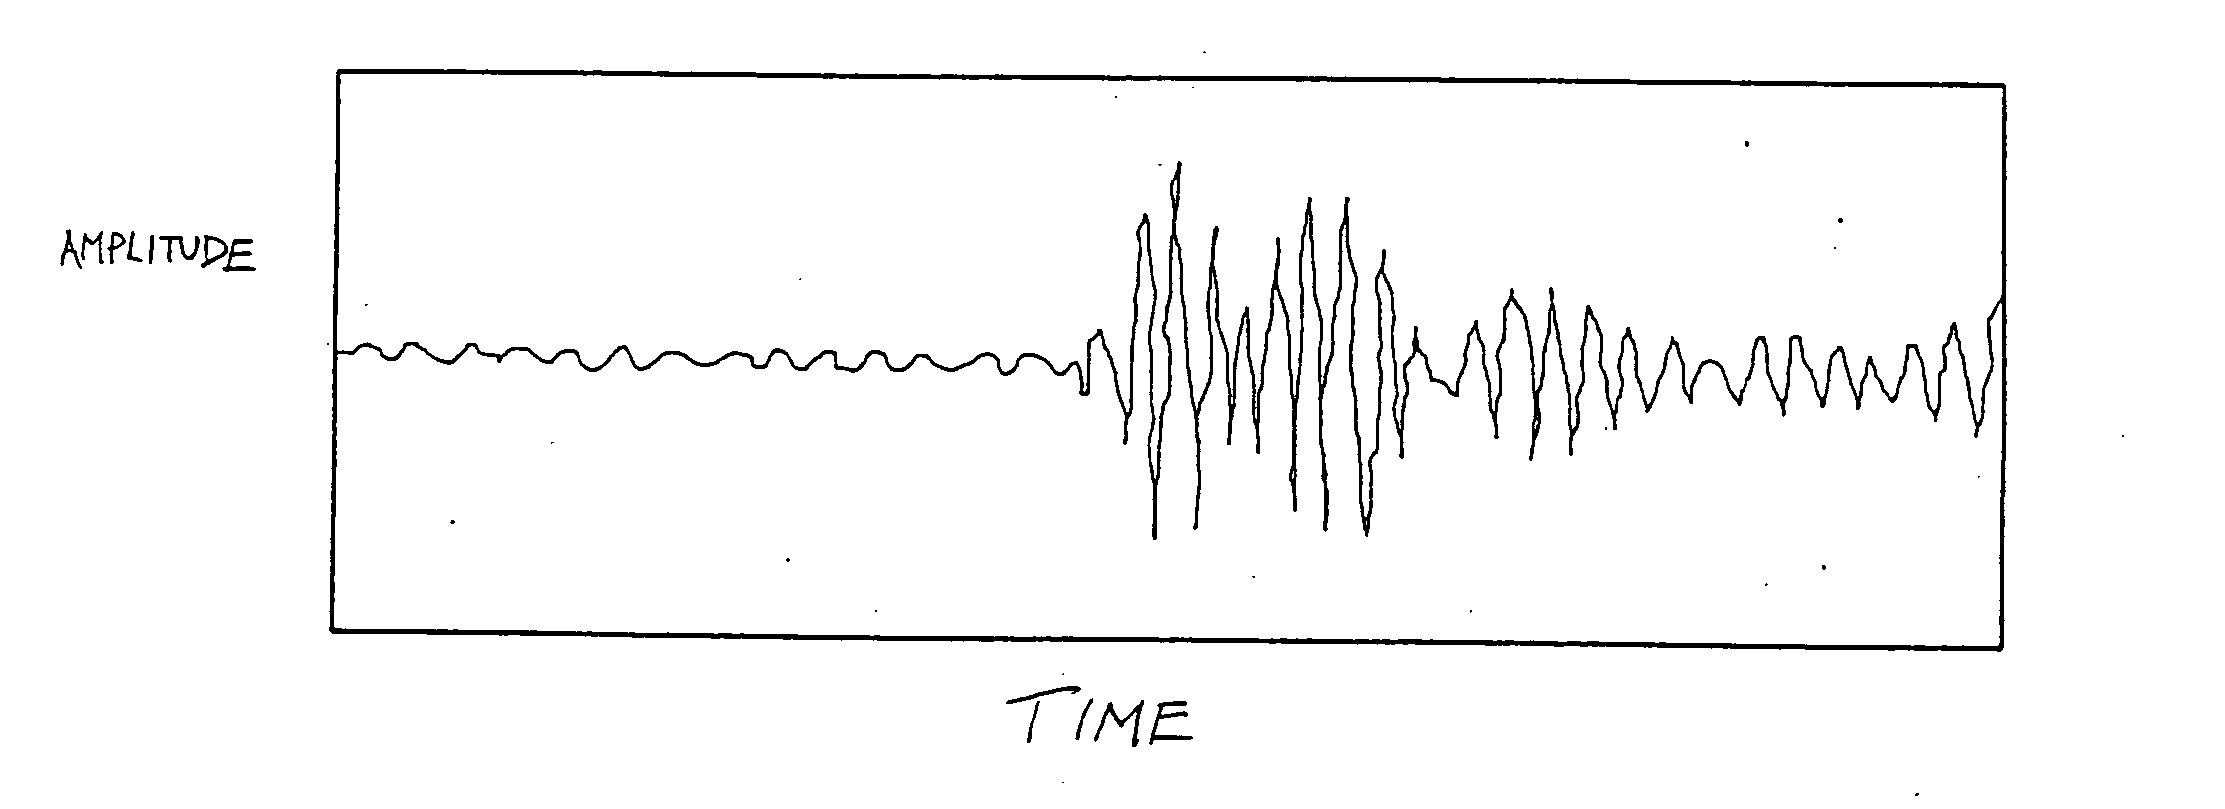 Self-tuning ultrasonic meter